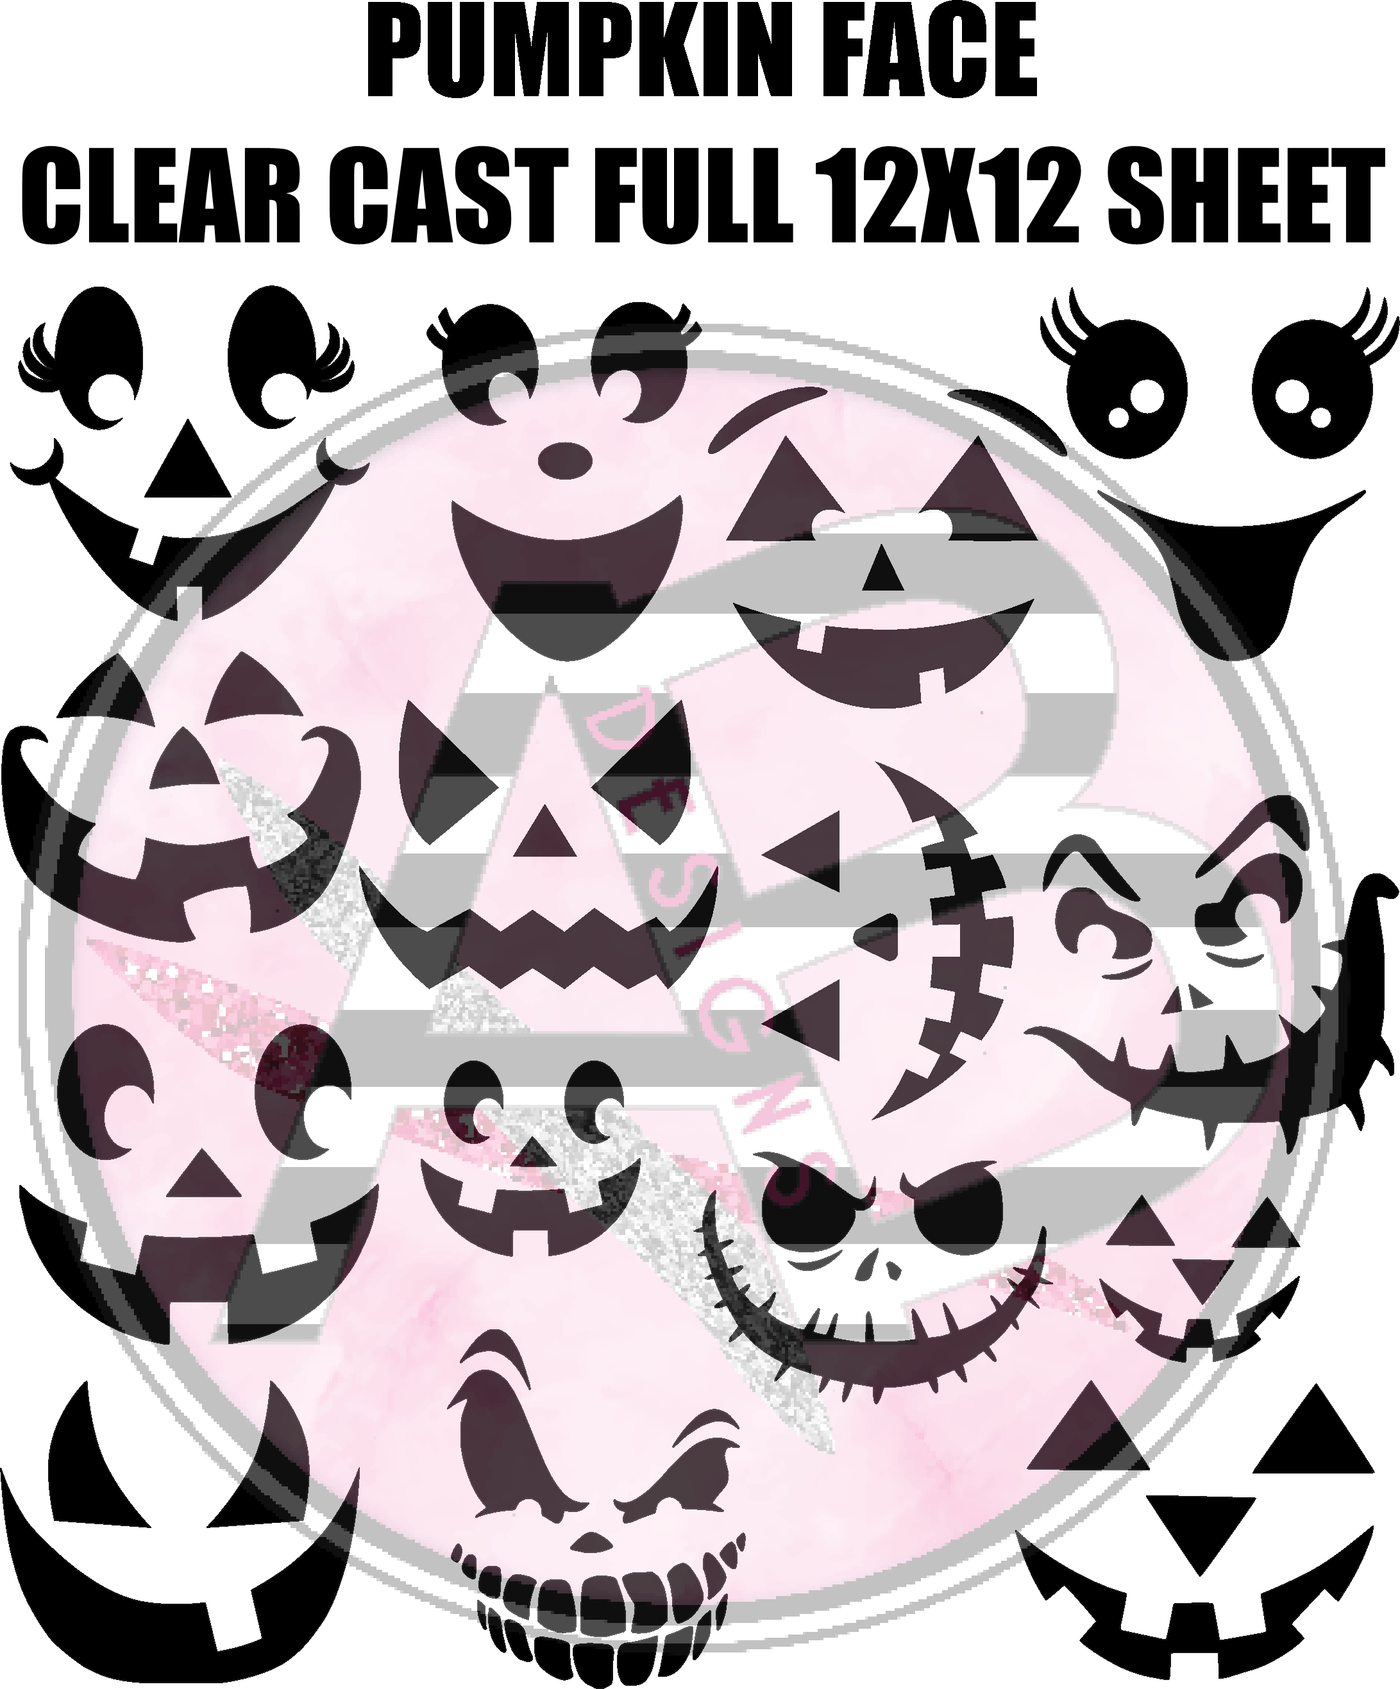 Pumpkin Faces 01 12x12 Clear Cast Decal